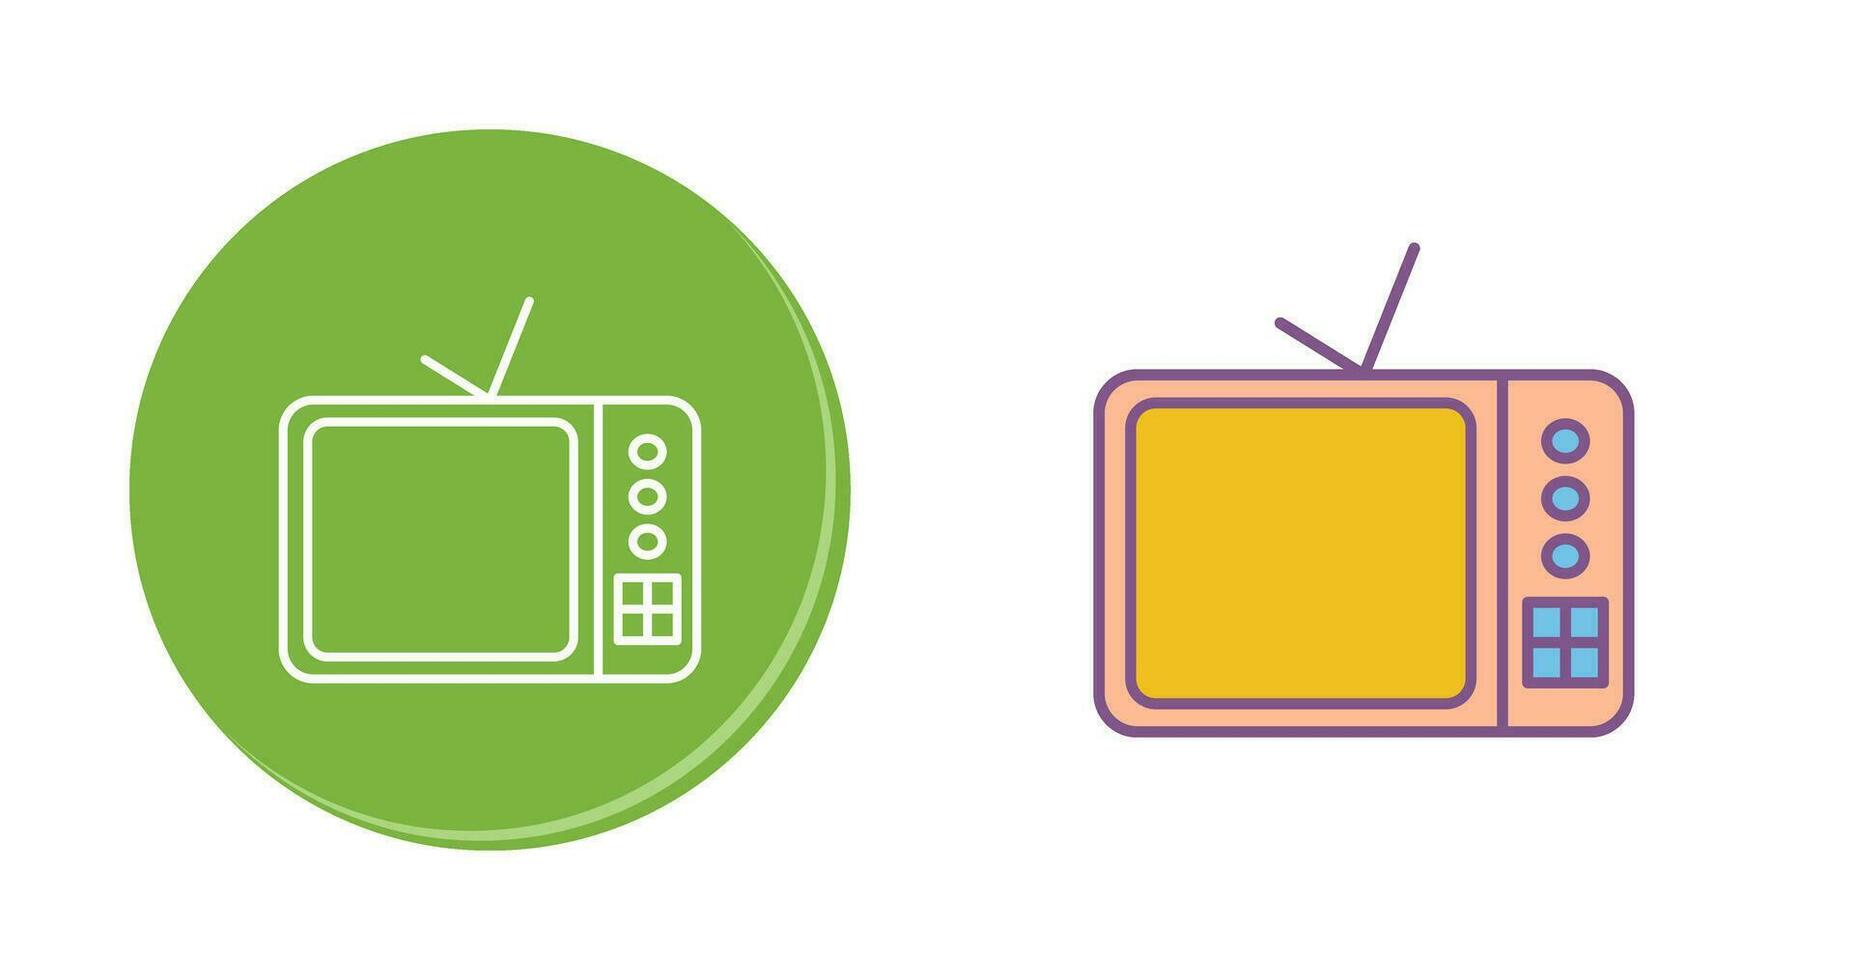 Vektorsymbol für Fernseher vektor